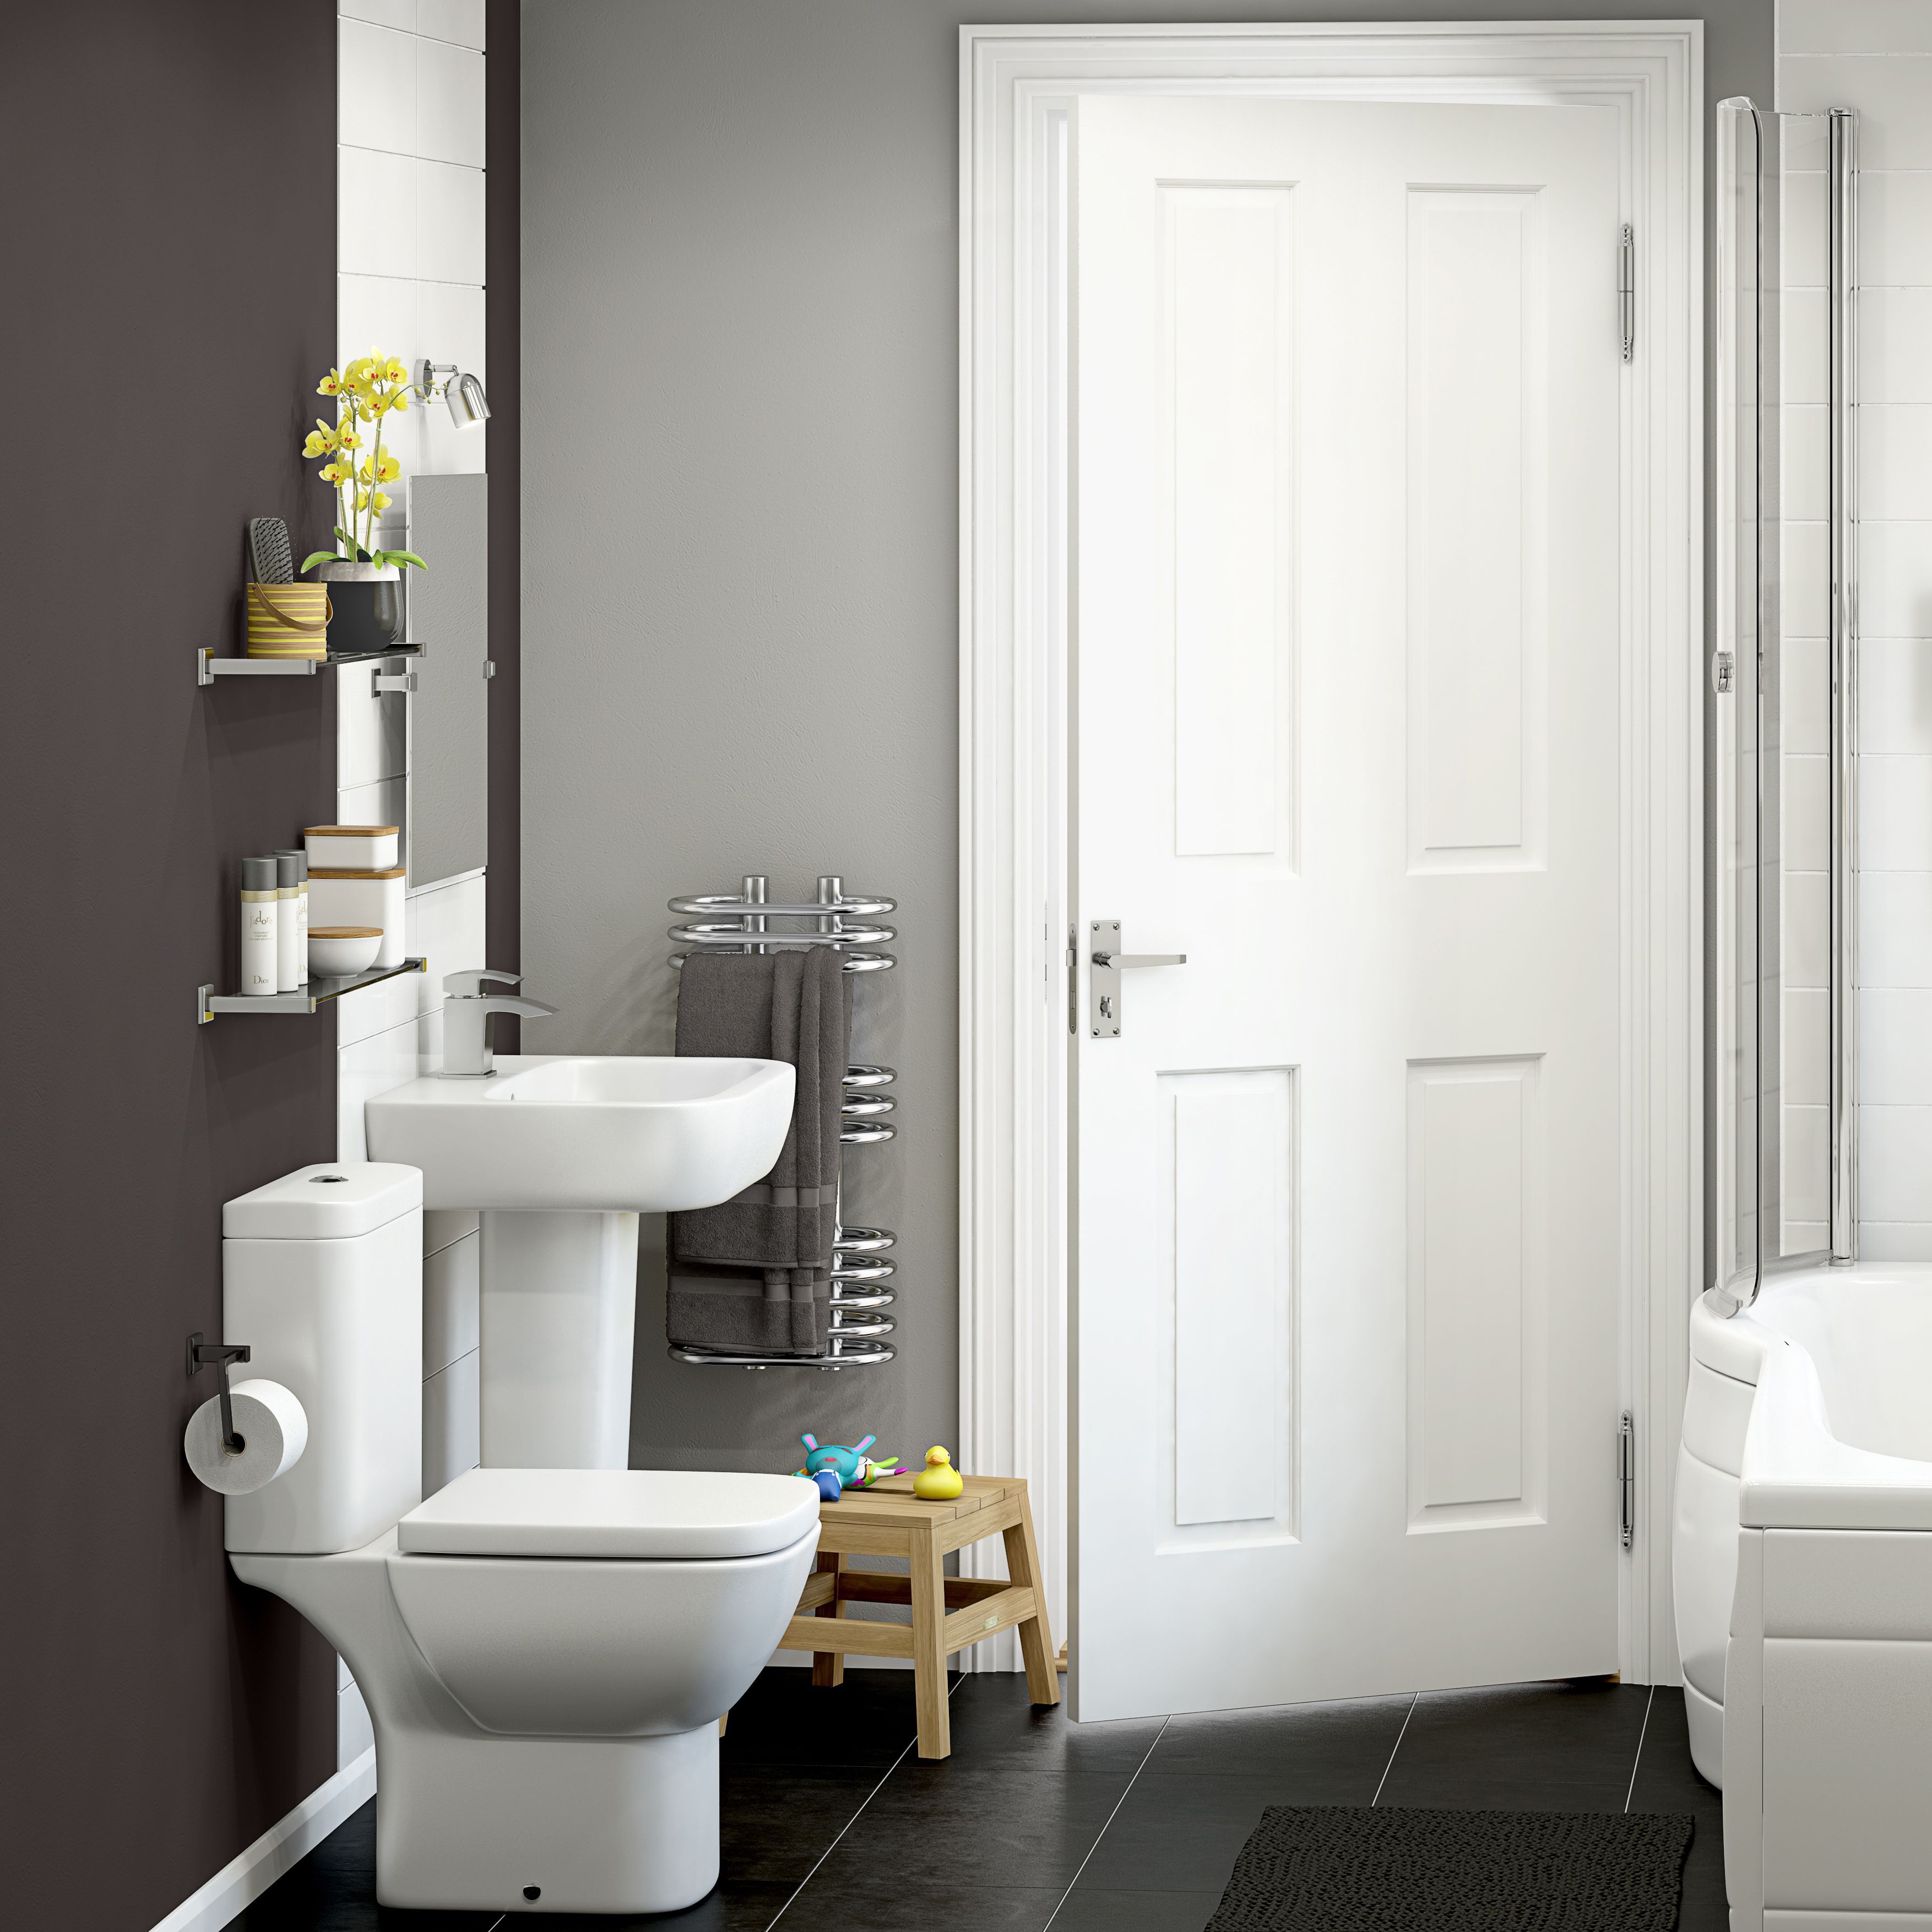 Cooke & Lewis Santoro Close-coupled Toilet & full pedestal basin | DIY